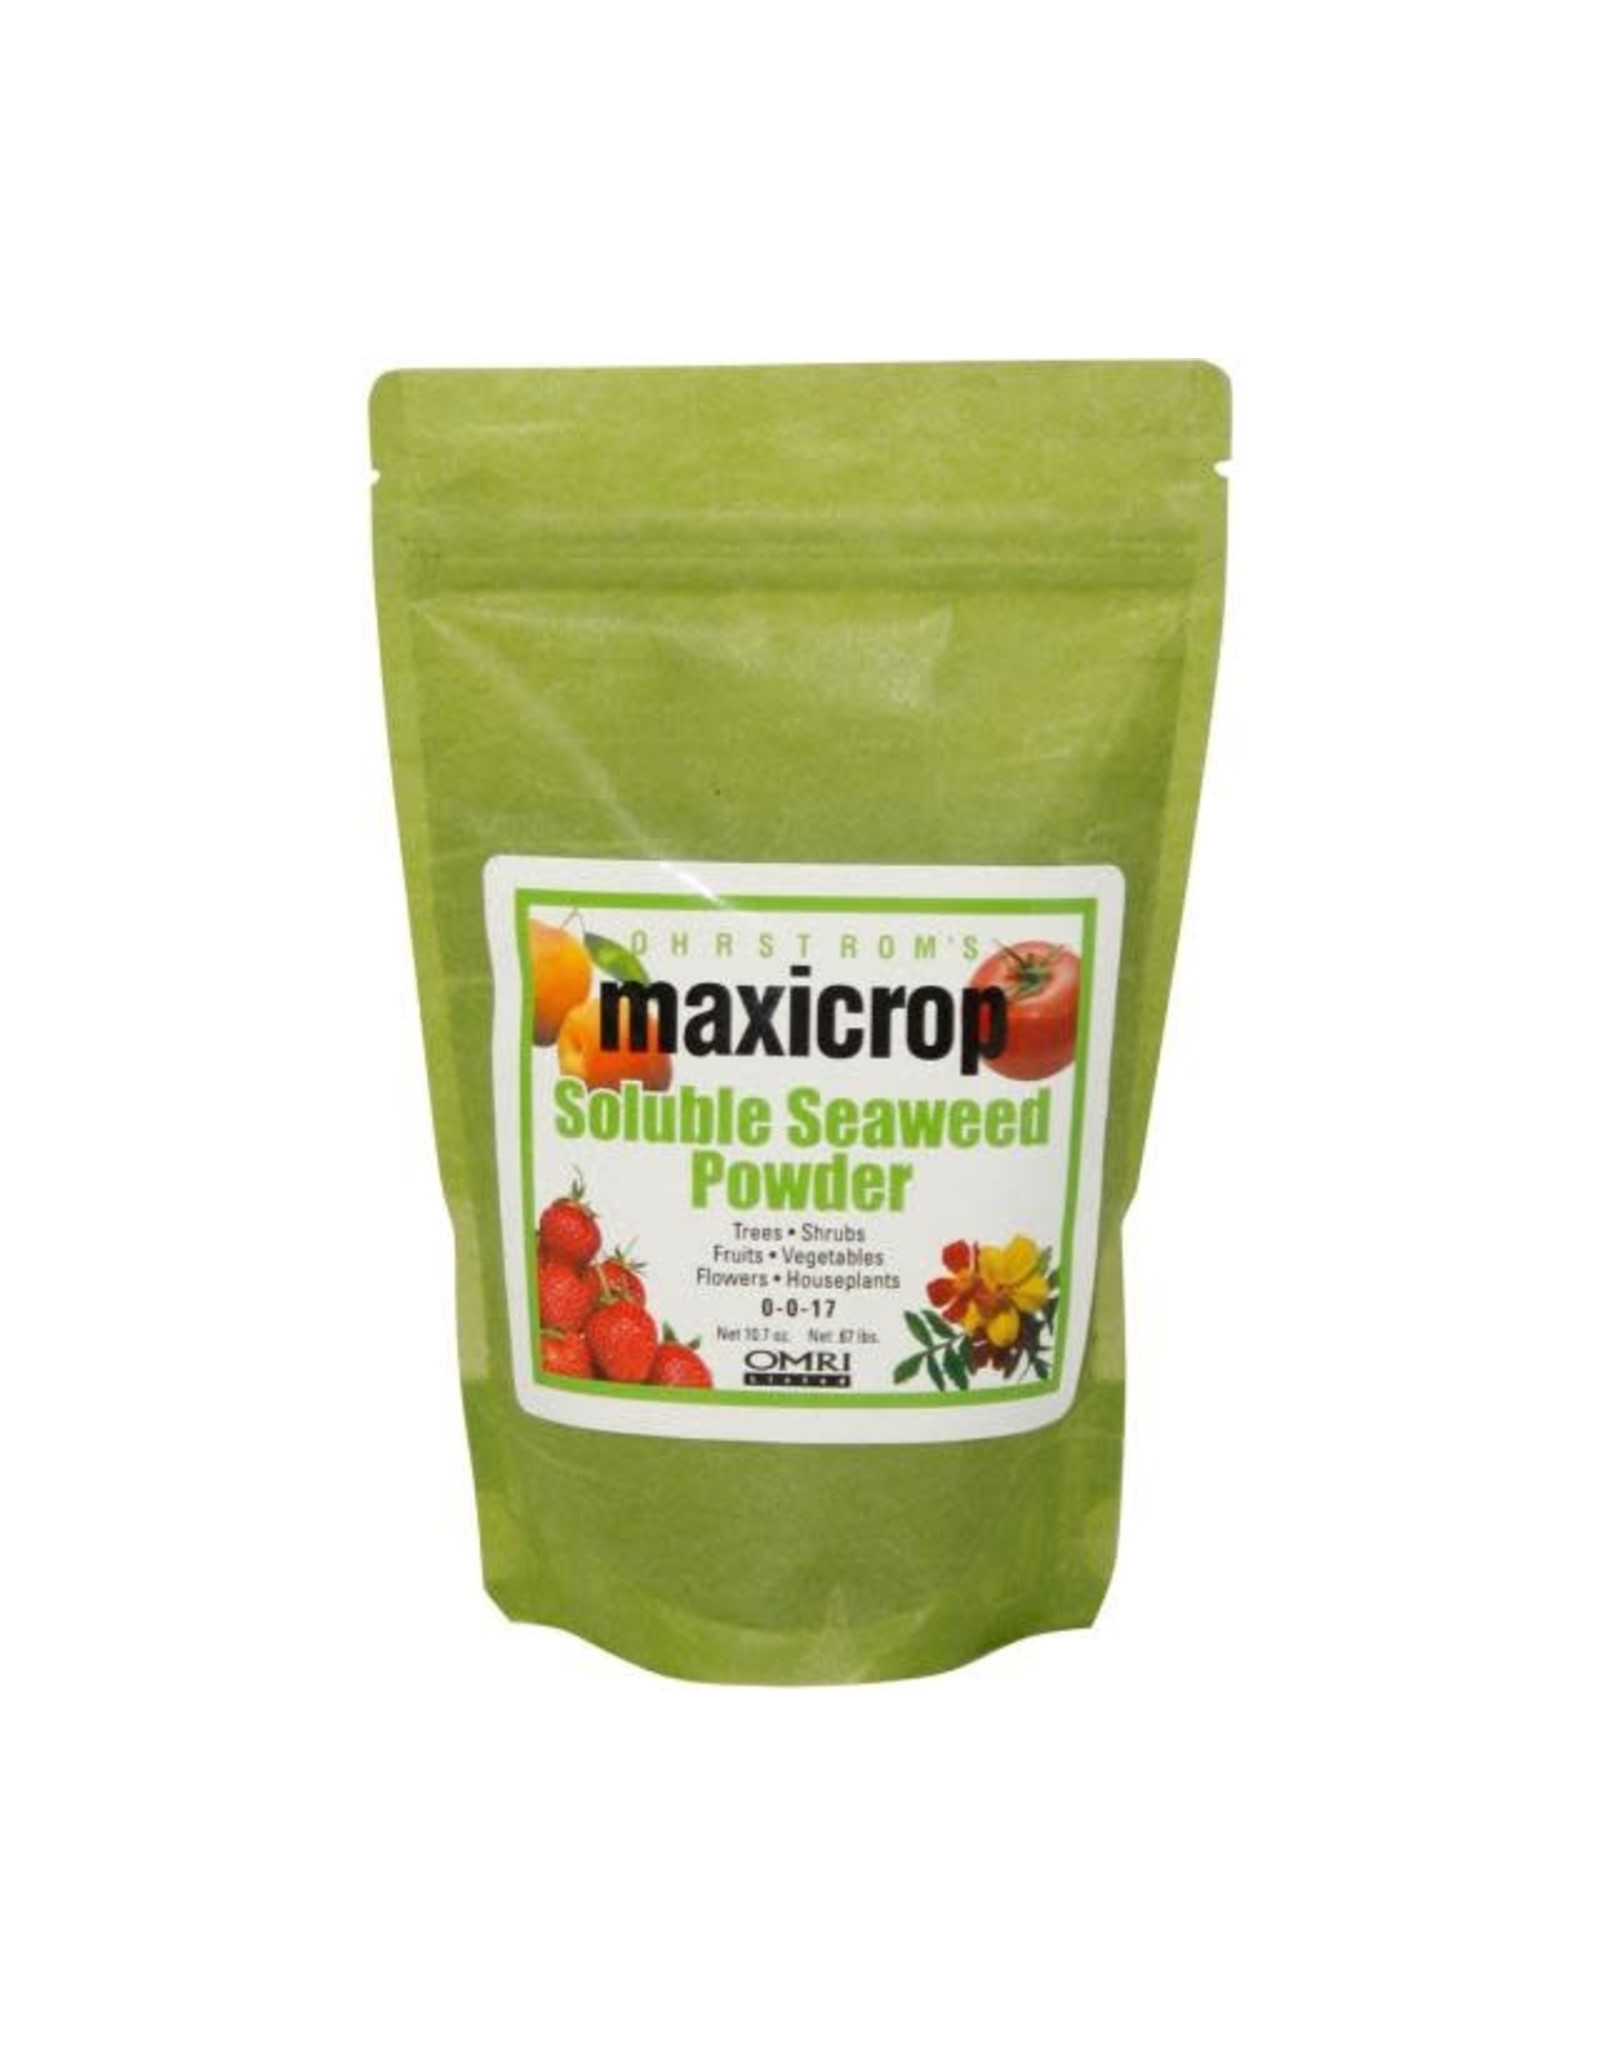 Maxicrop Maxicrop Soluble Seaweed Powder, 10.7 oz